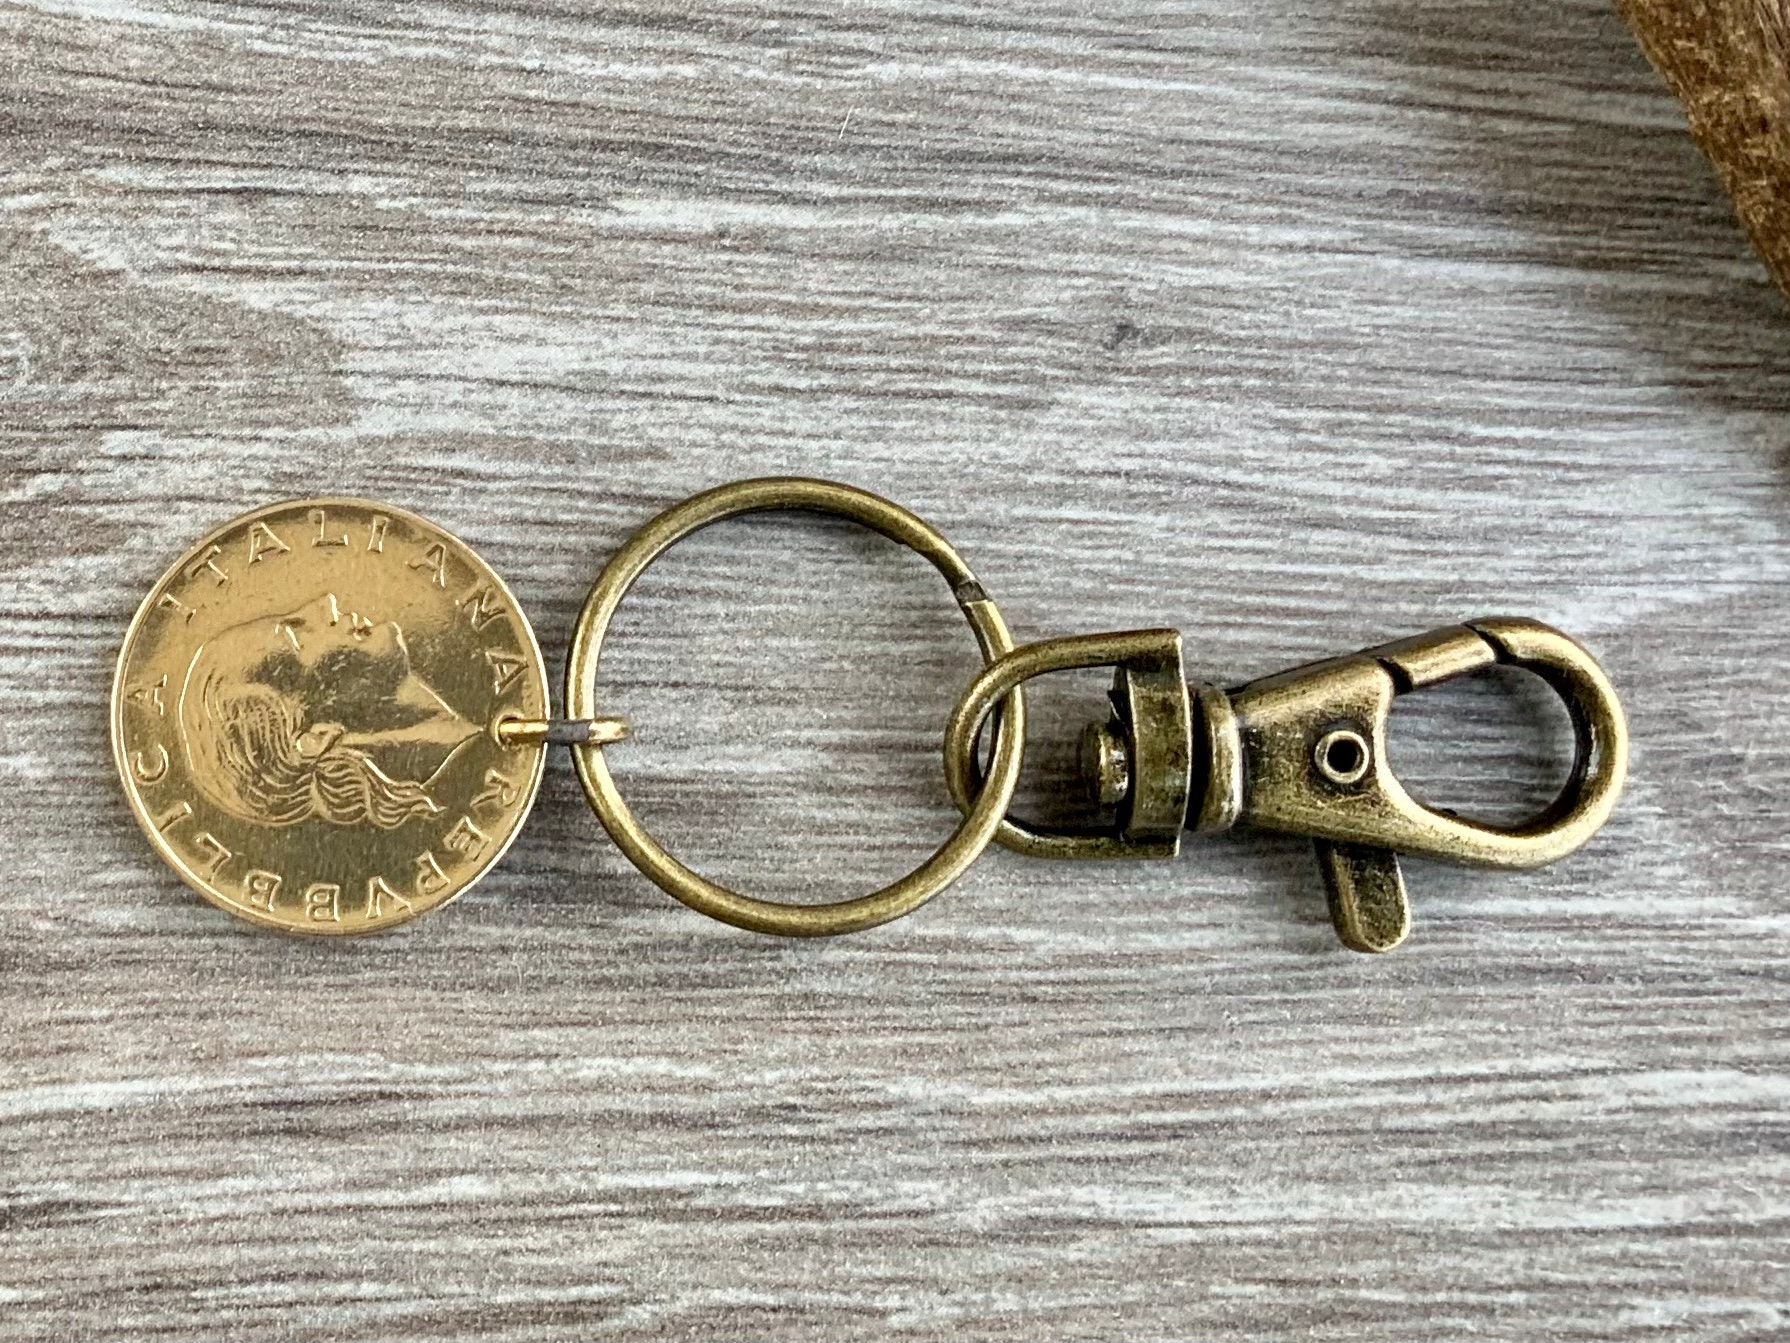 1983 Italian 200 Lire Key Chain, Clip Style Key Ring, a Perfect